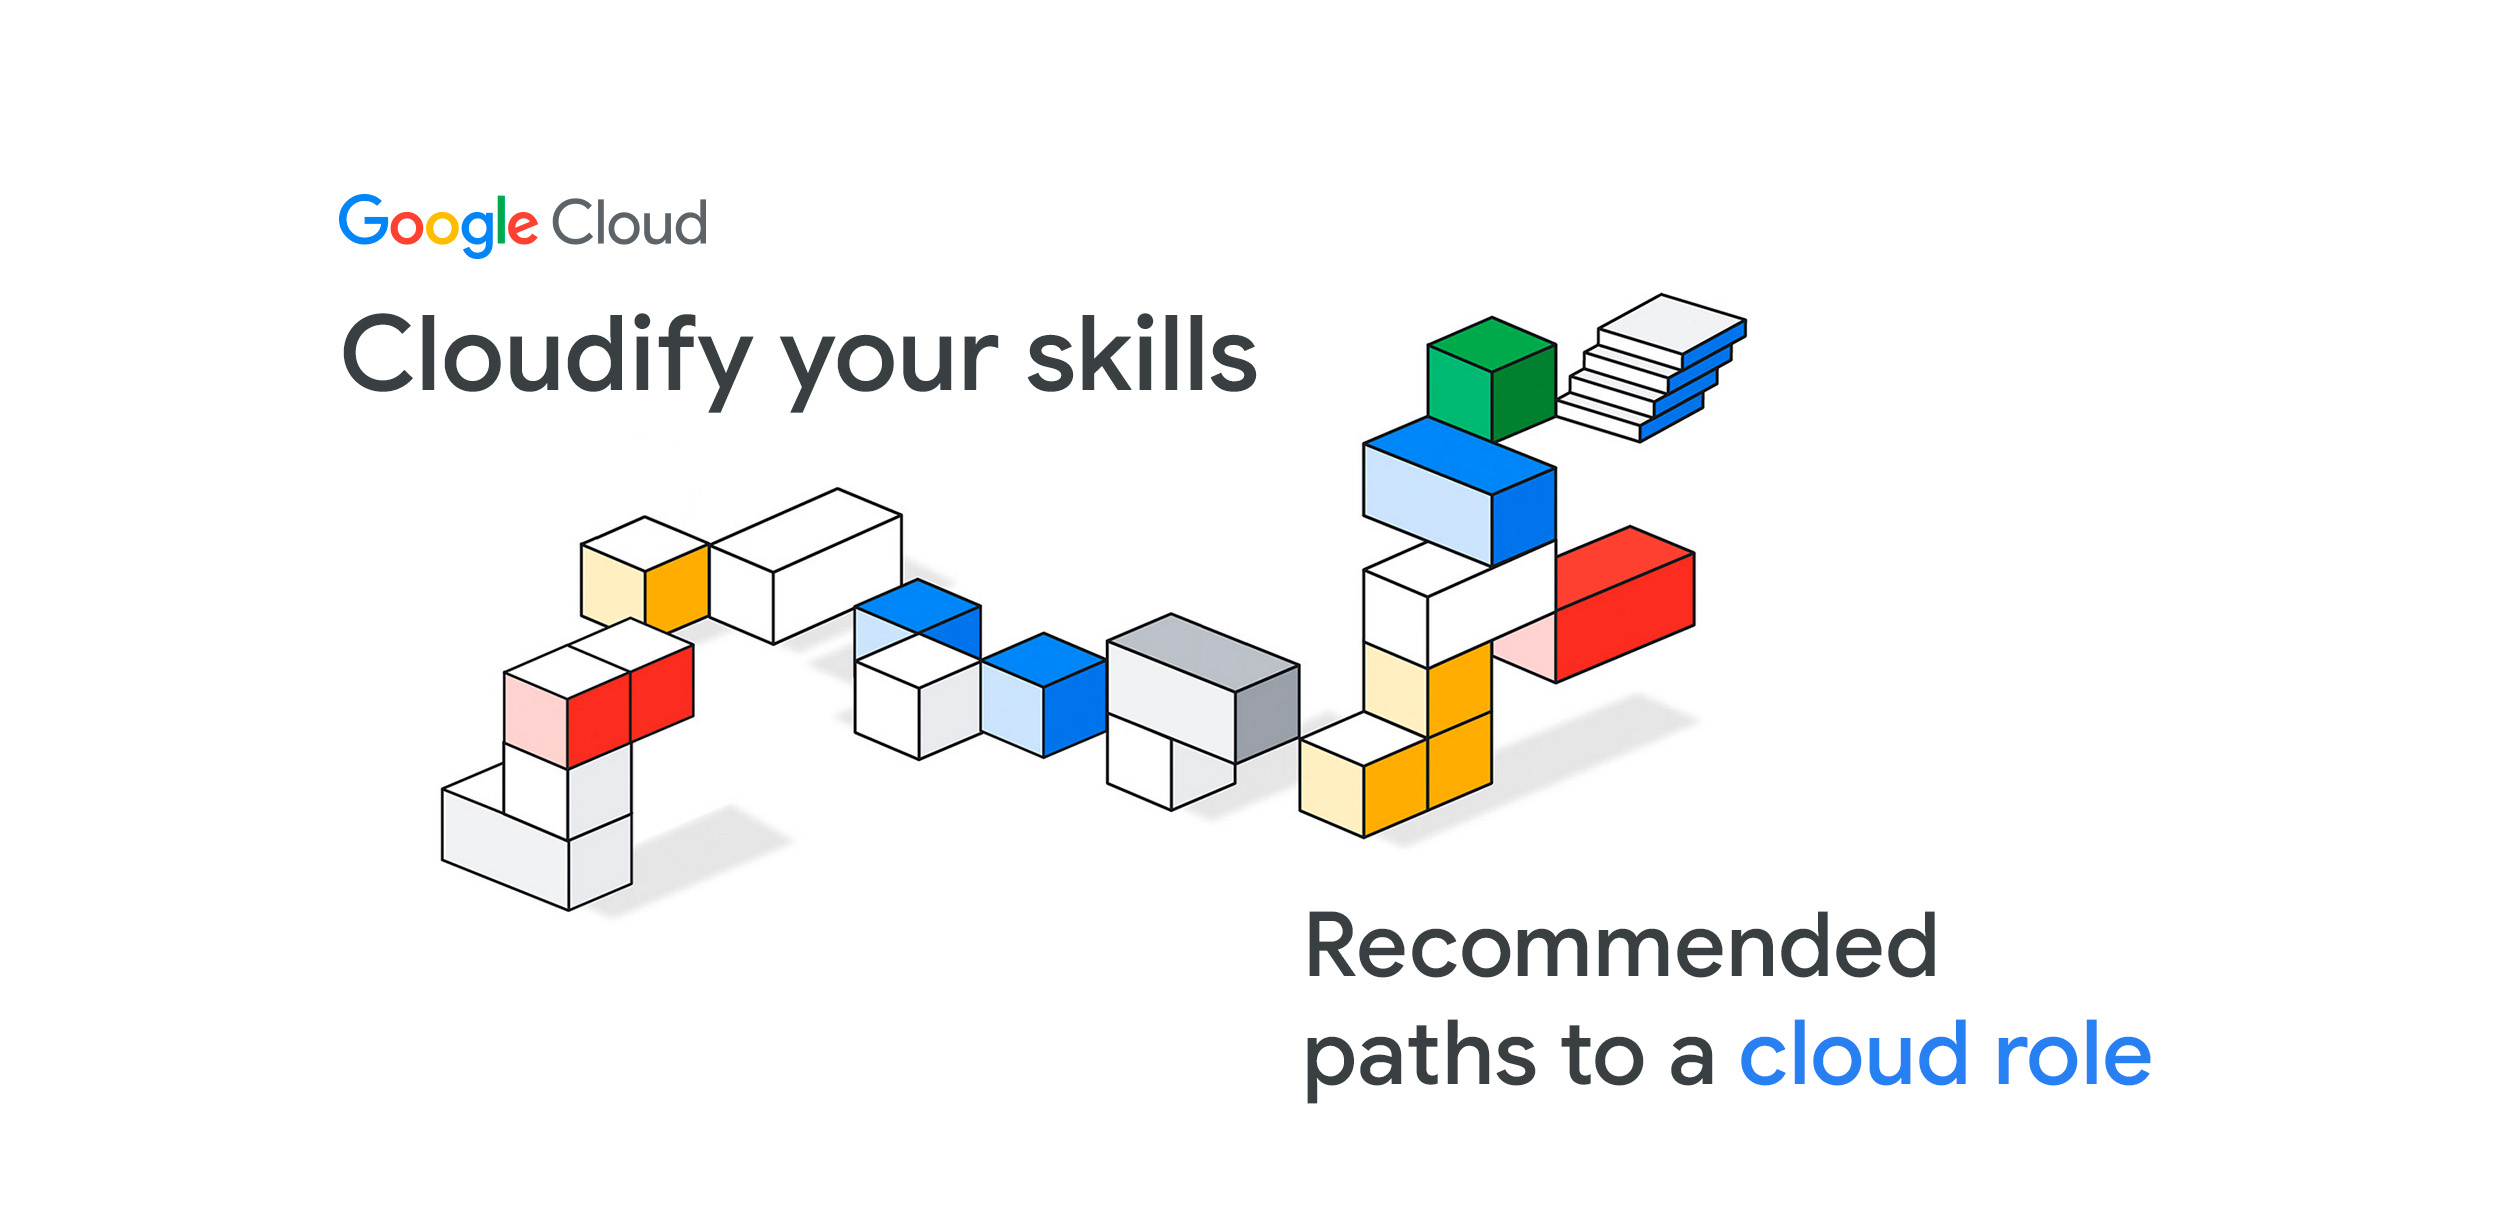 Professional-Cloud-Architect Lernhilfe